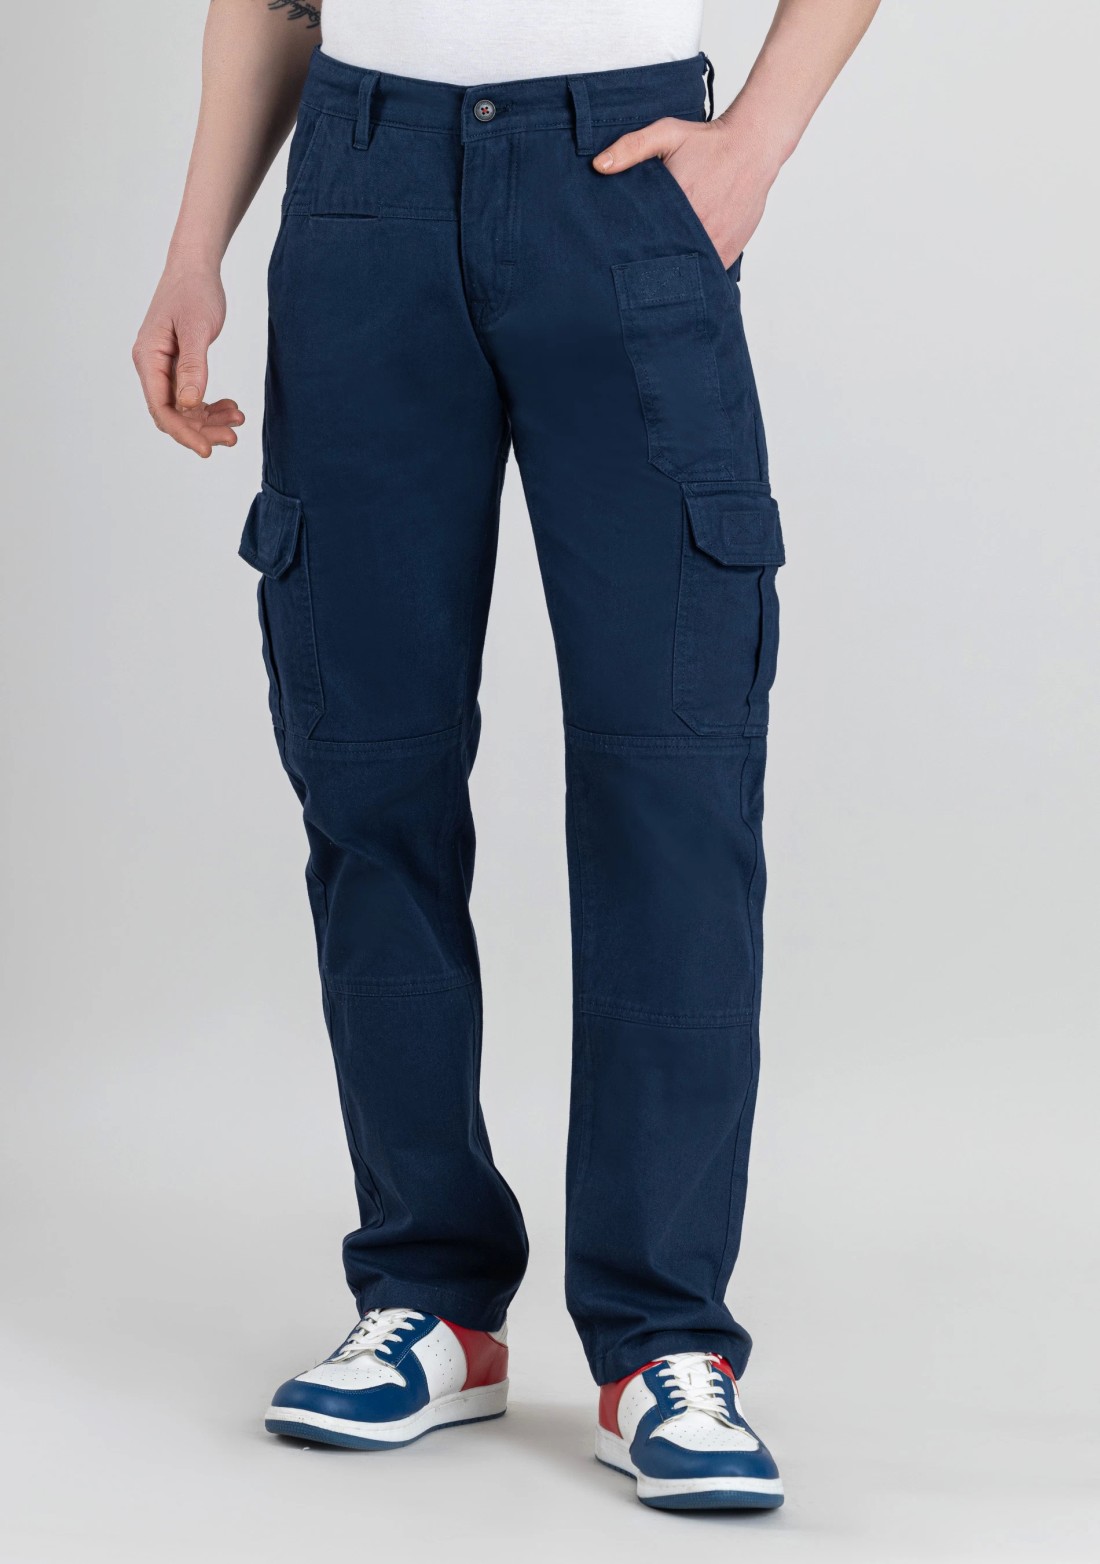 Regular Fit Ripstop cargo trousers - Khaki green - Men | H&M IN